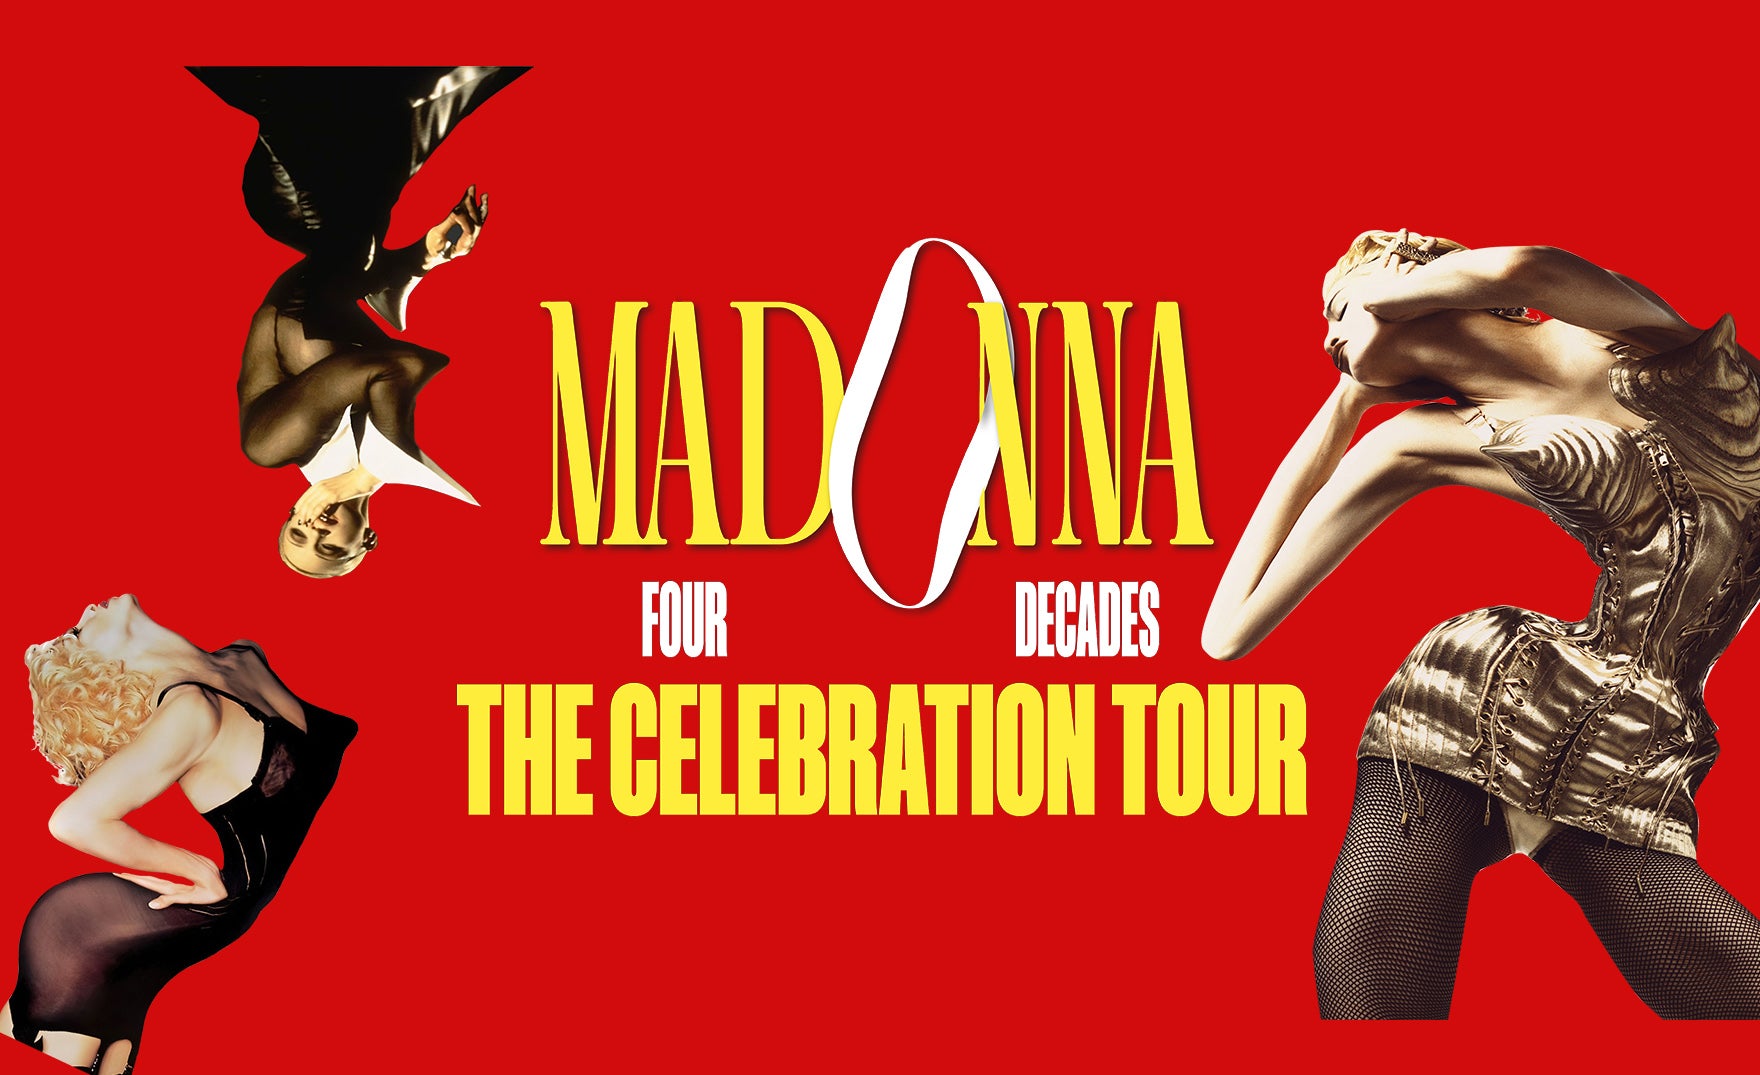 Madonna: The Celebration Tour